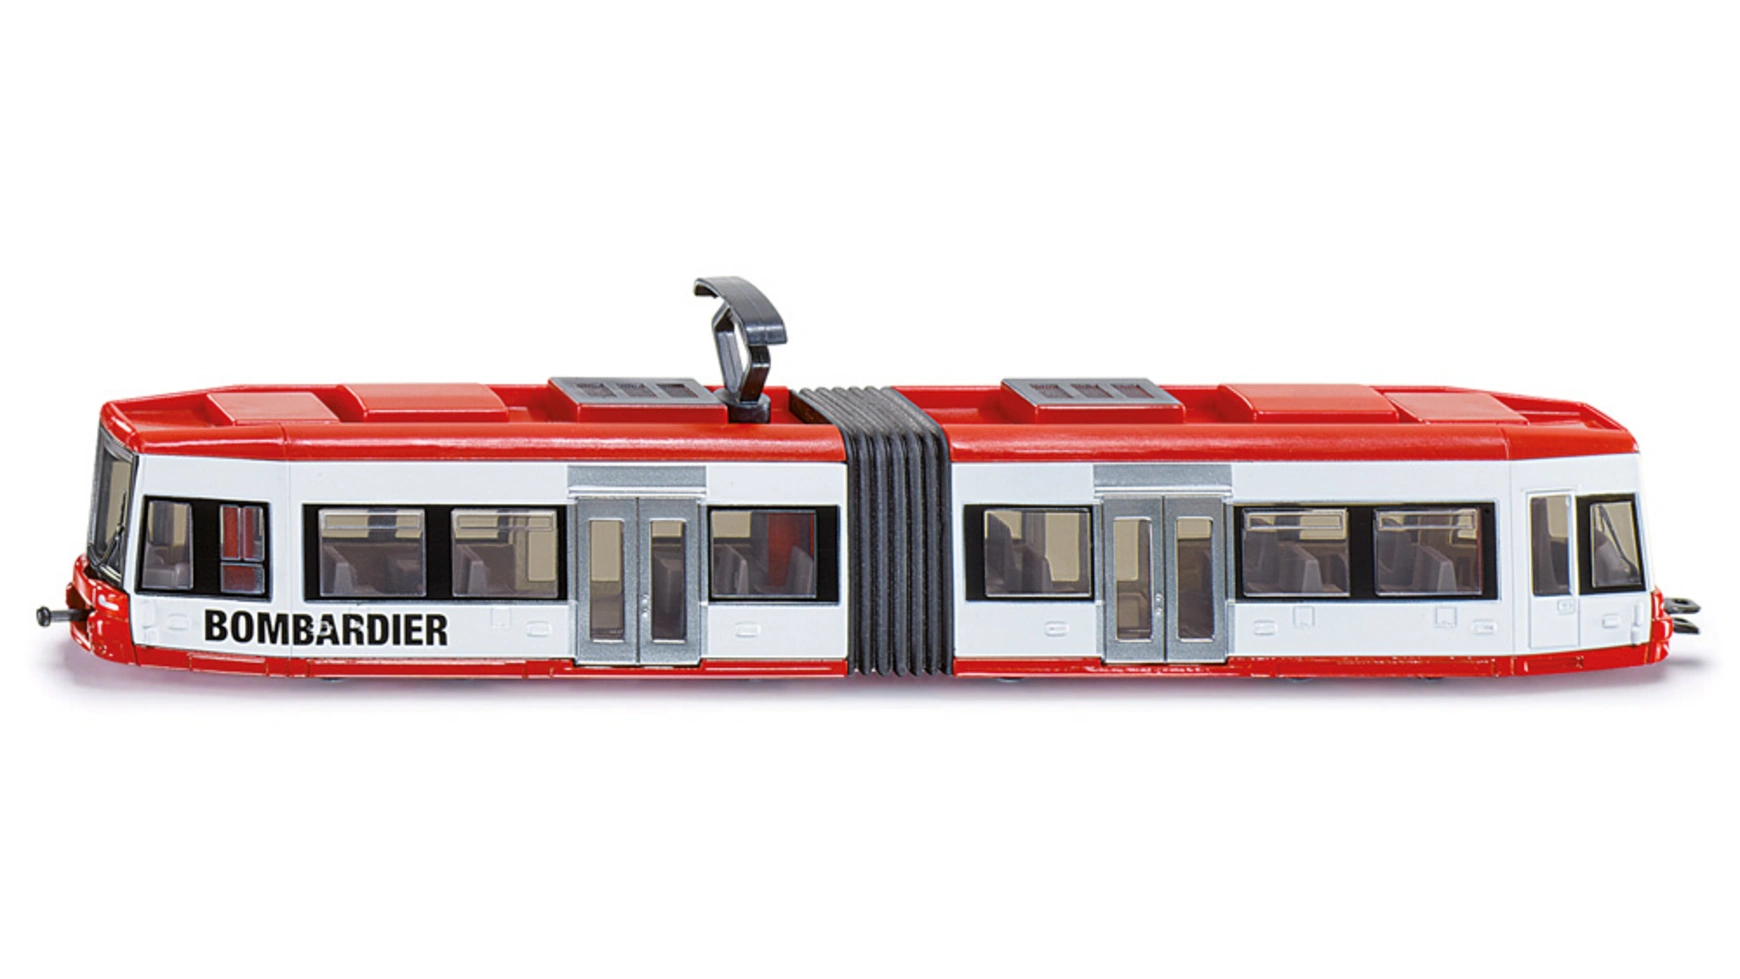 Супер трамвай Siku трамвай siku bombardier 1895 1 87 23 см красный белый